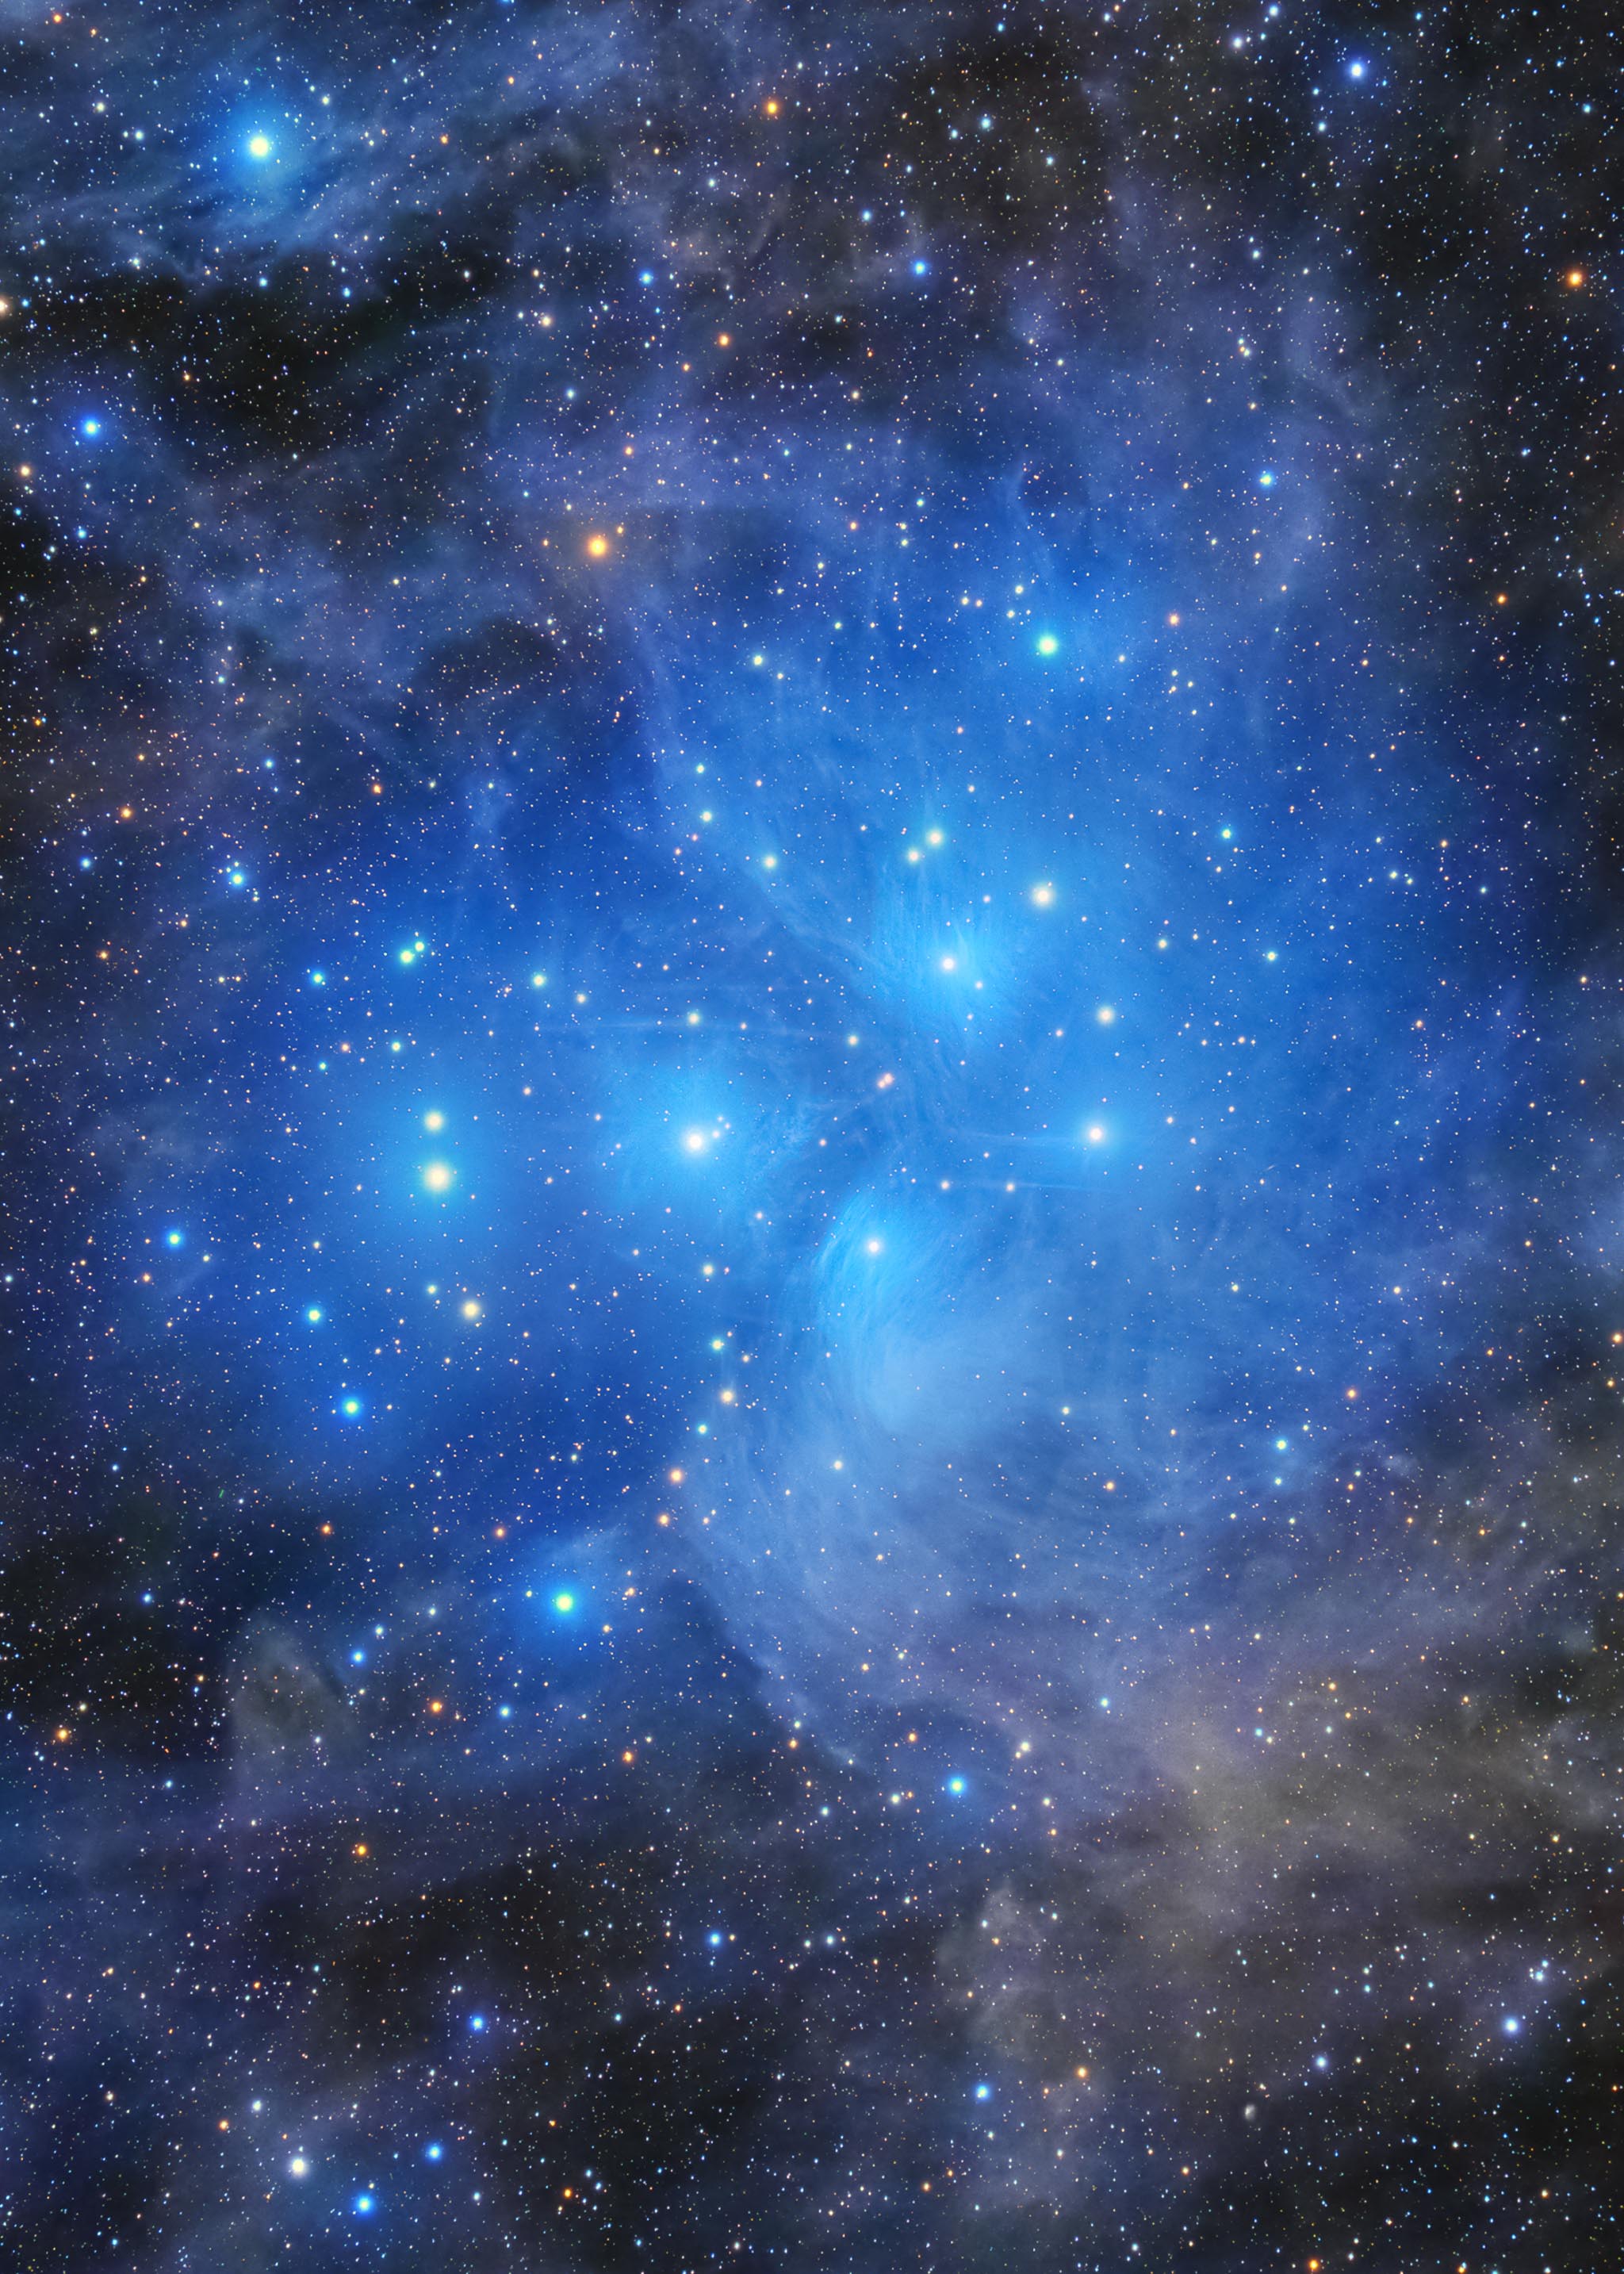 The Pleiades - M45